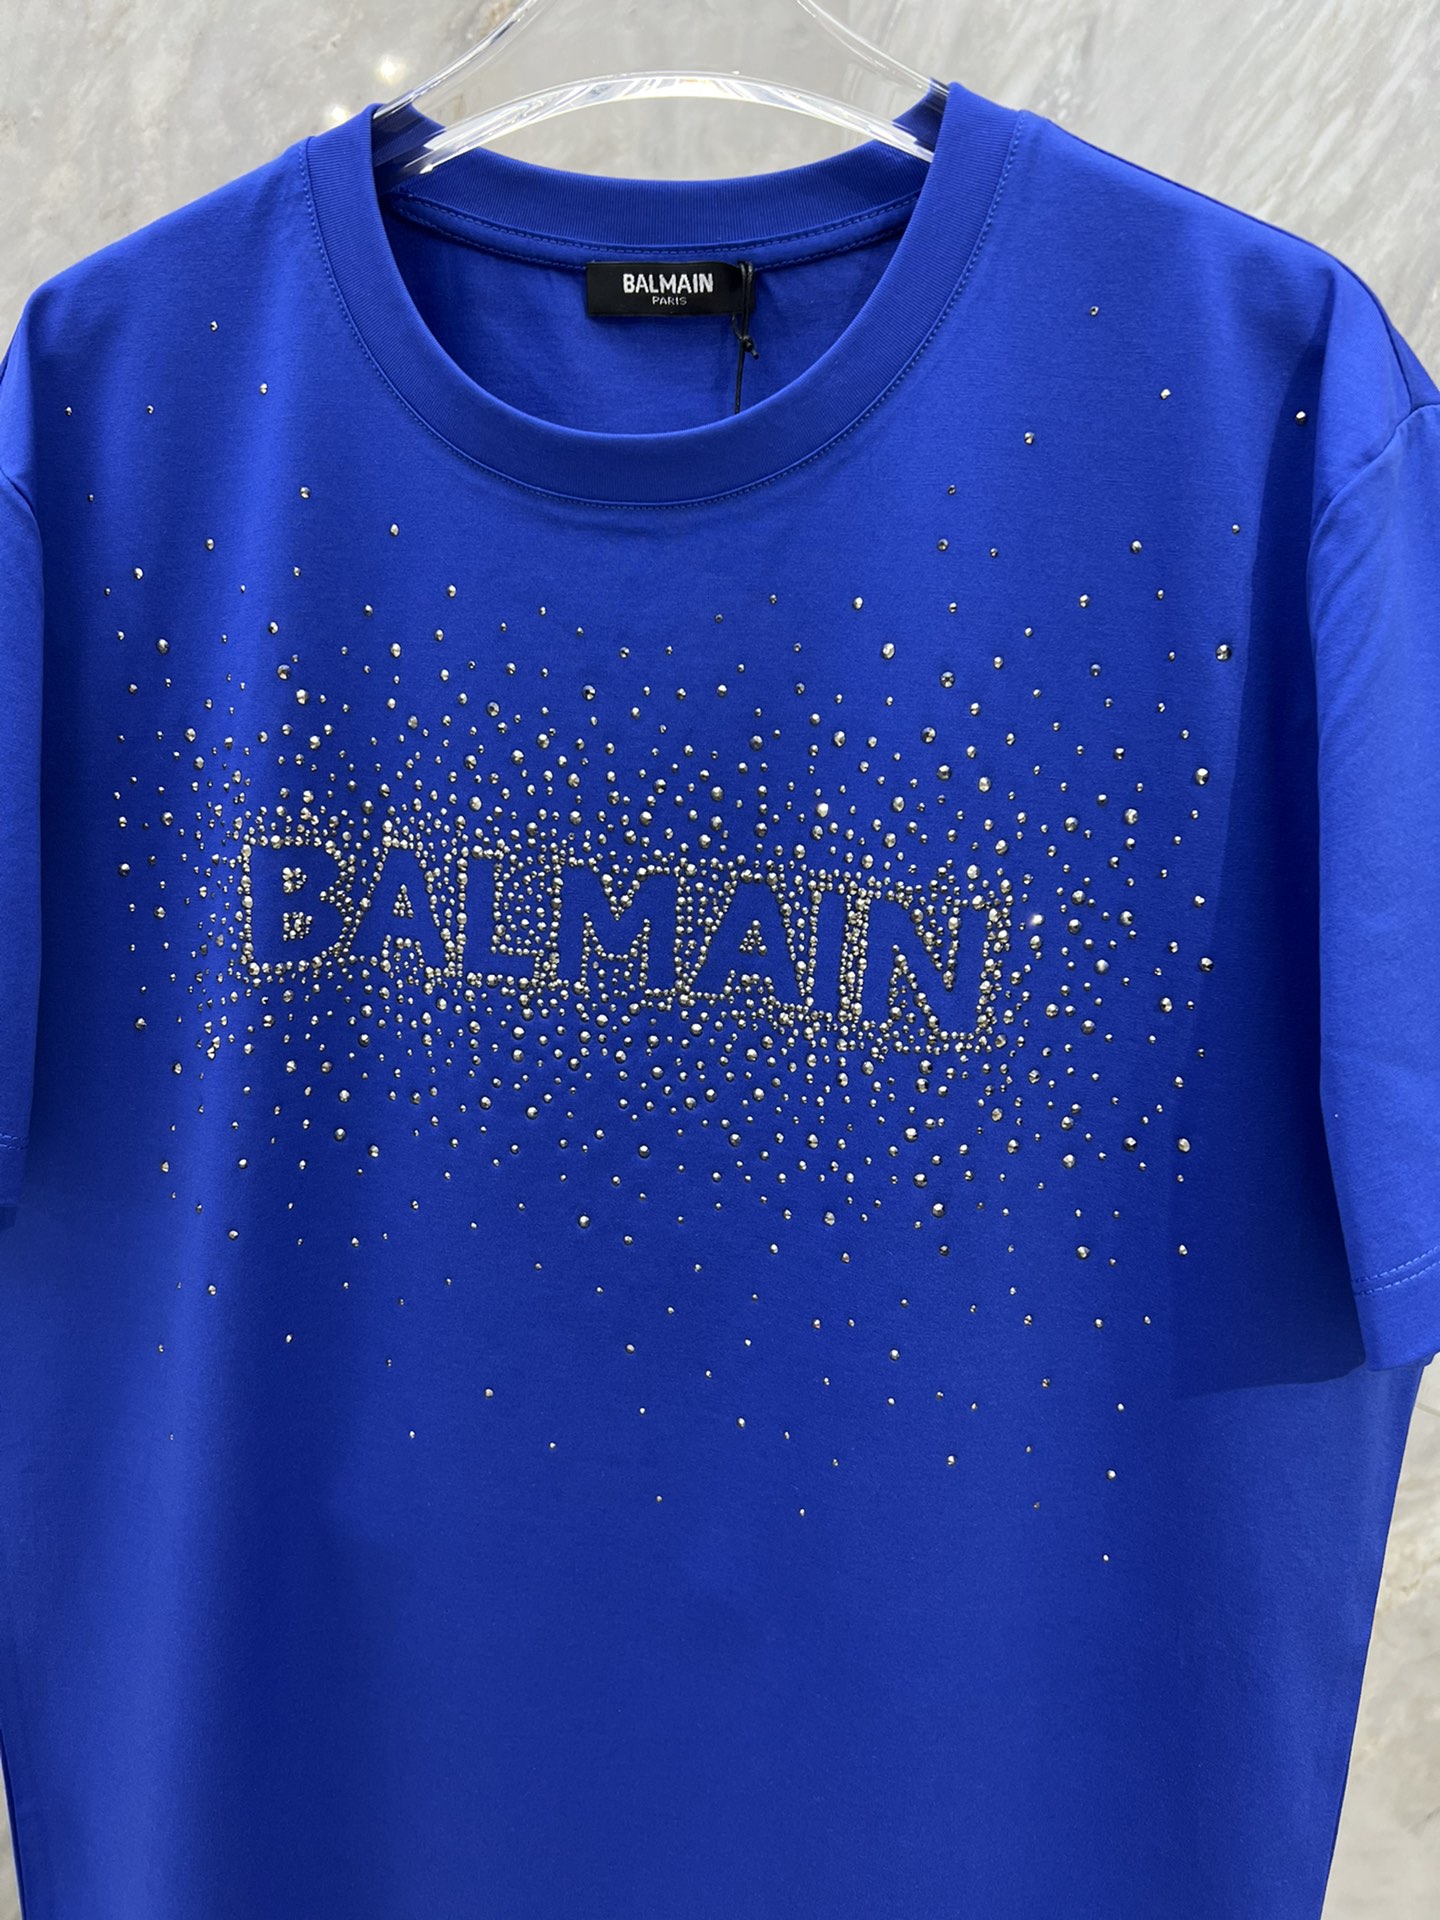 BALMAIN/巴尔曼24ss新款男装复古徽标水晶缀饰棉质短袖T恤正面水晶装饰彰显巴尔曼品牌格调演绎品牌